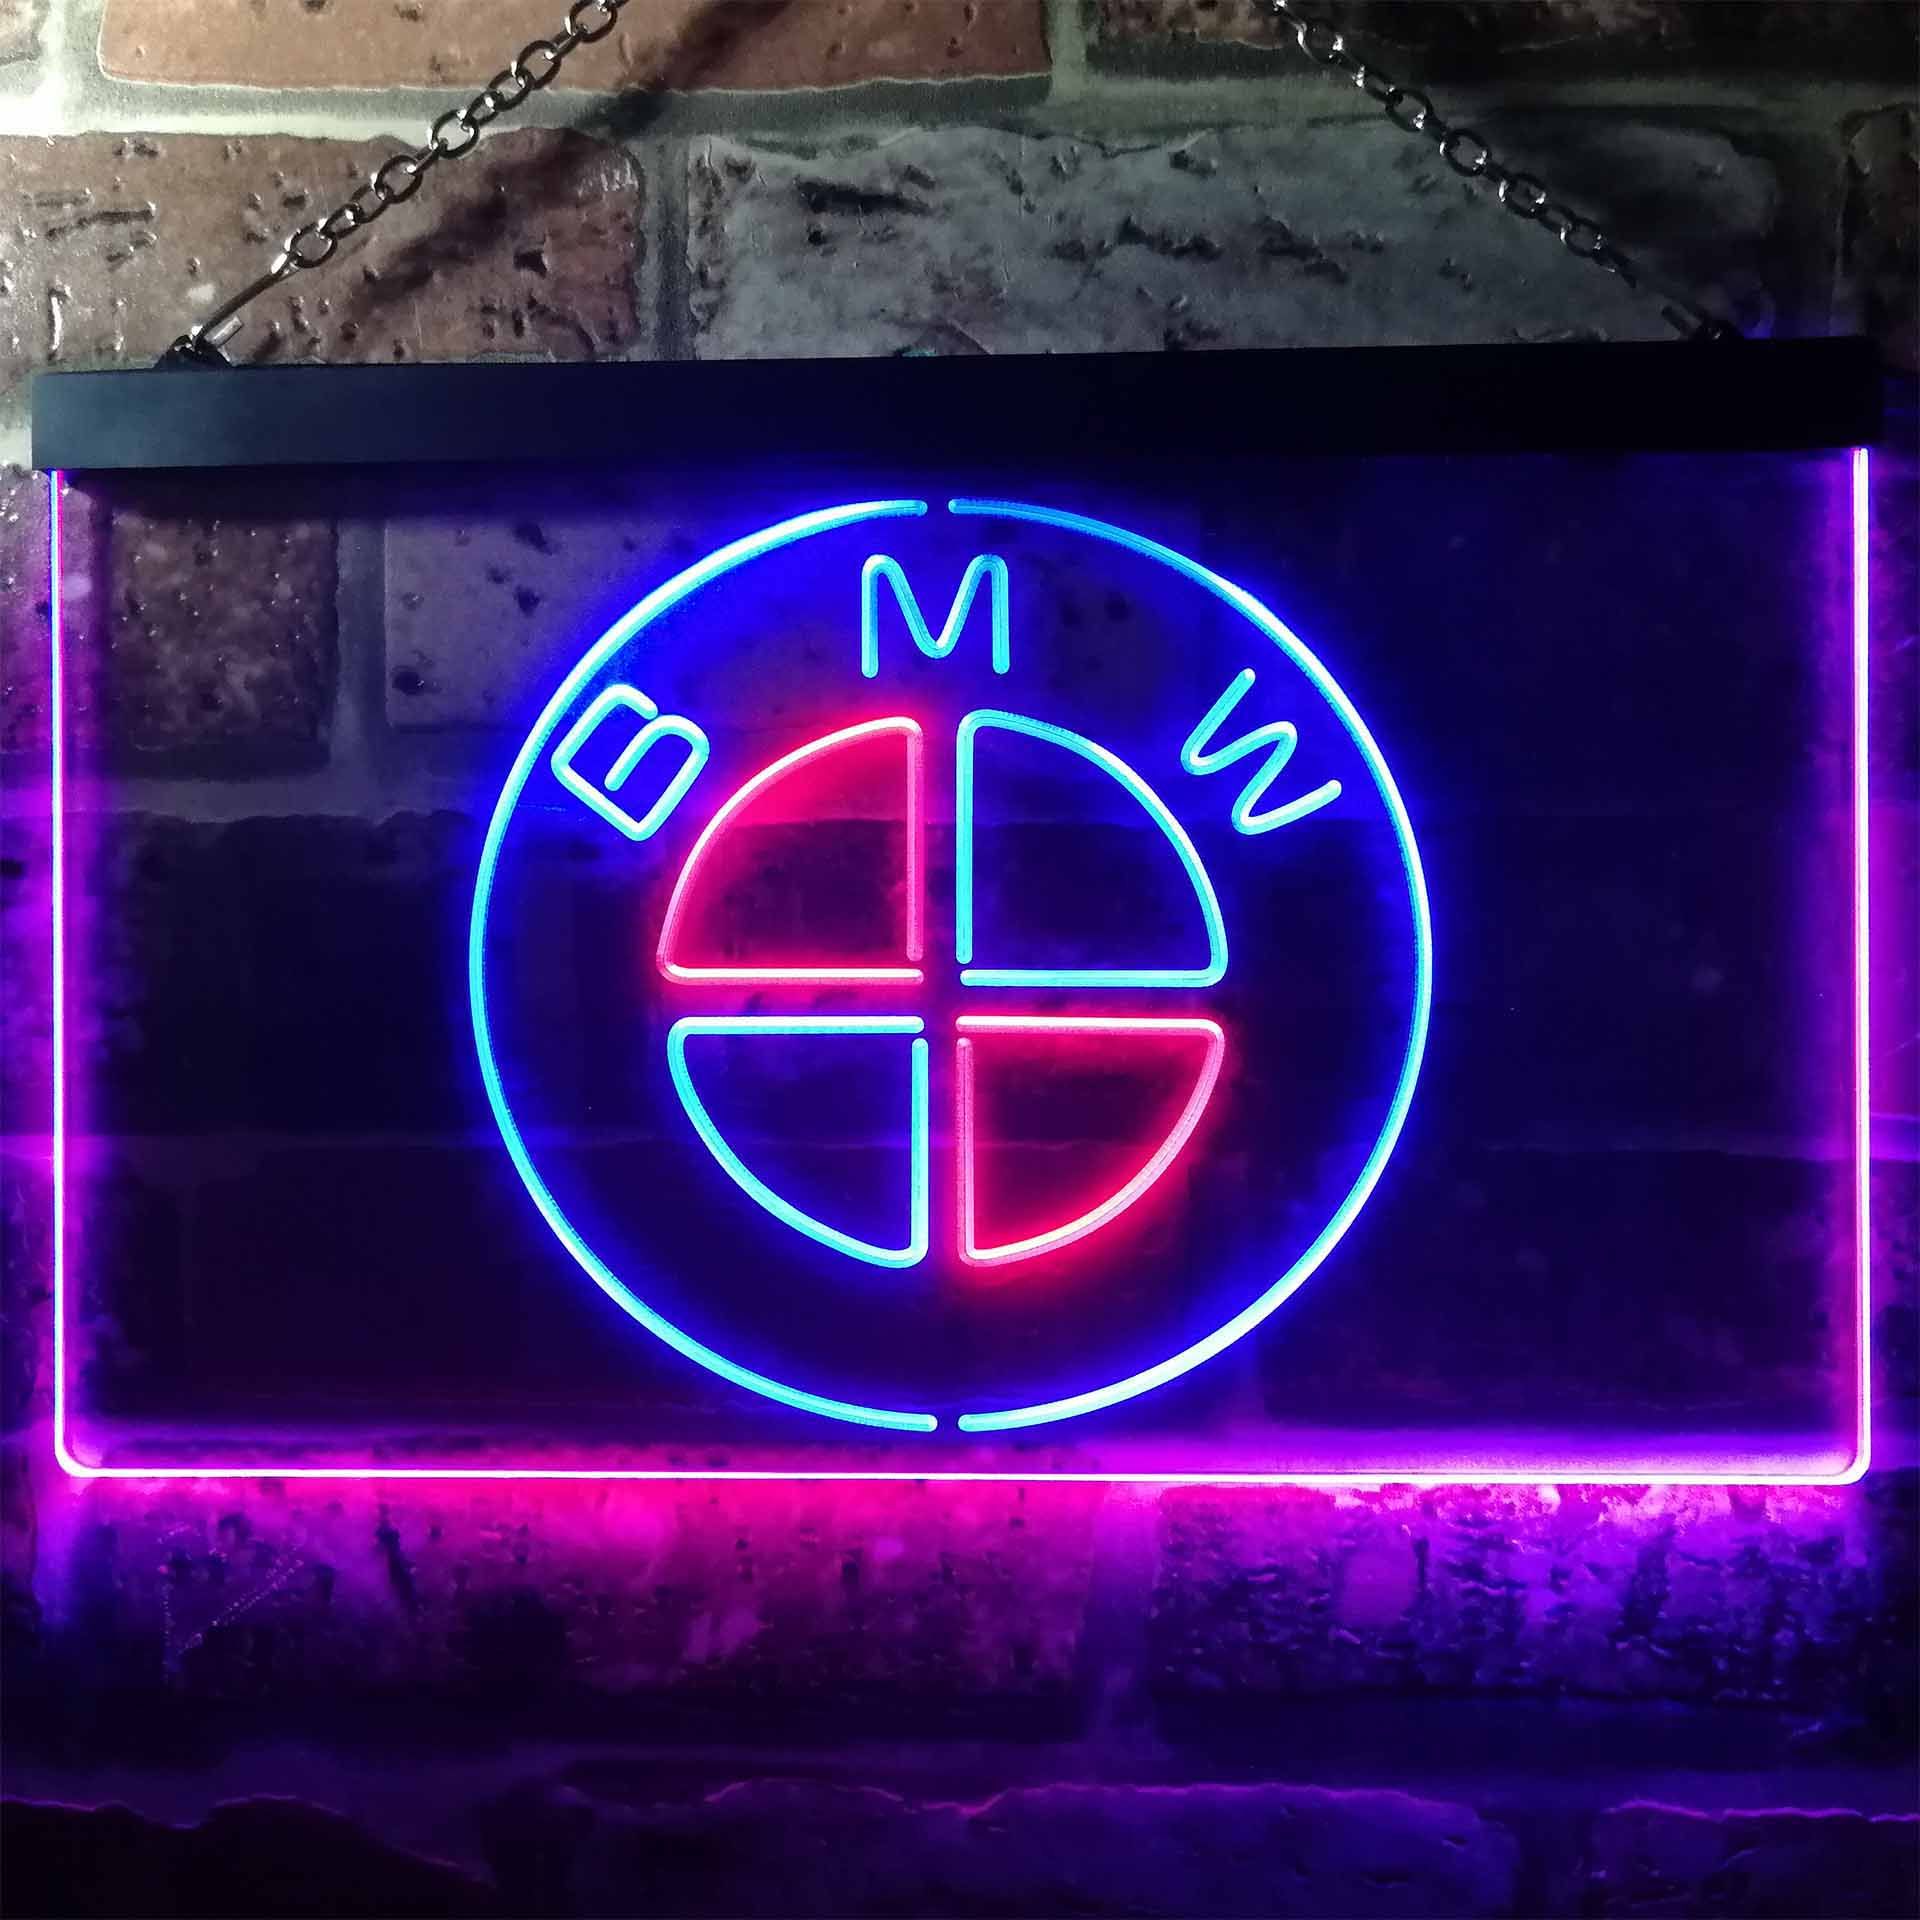 St Louis Blues Round Logo Neon-Like LED Sign